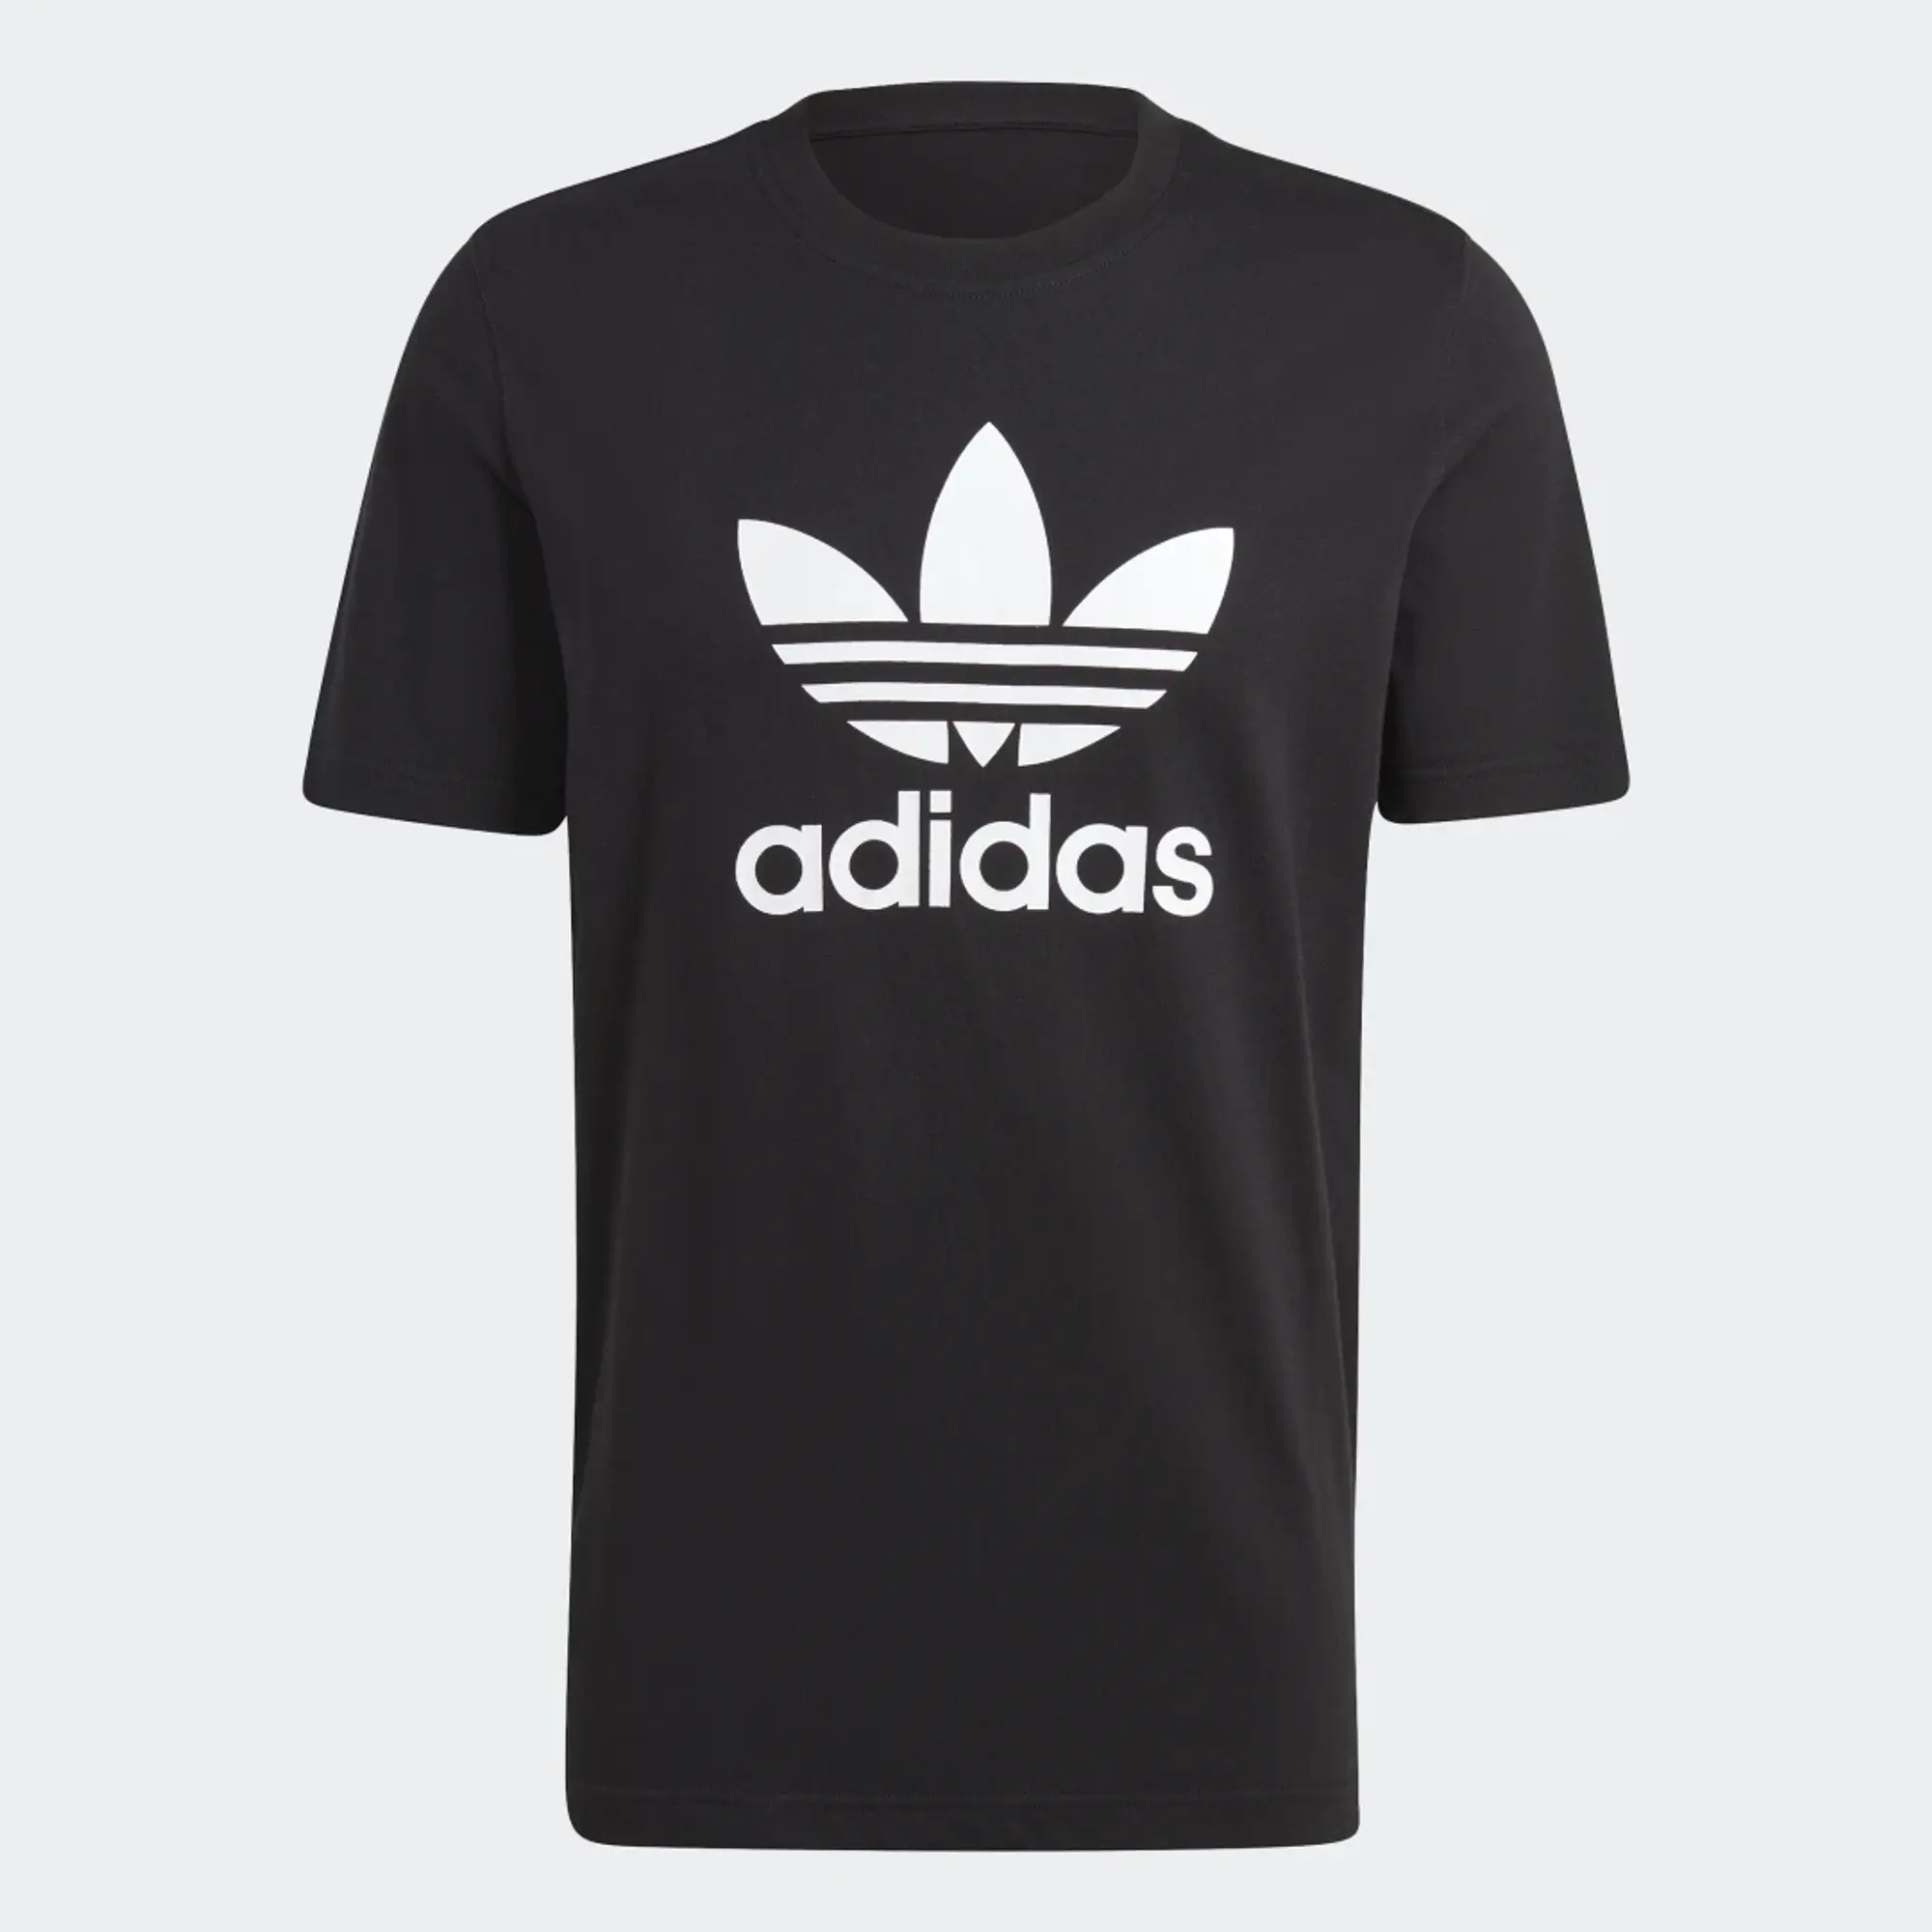 Adidas Originals Trefoil T-Shirt Black/ White